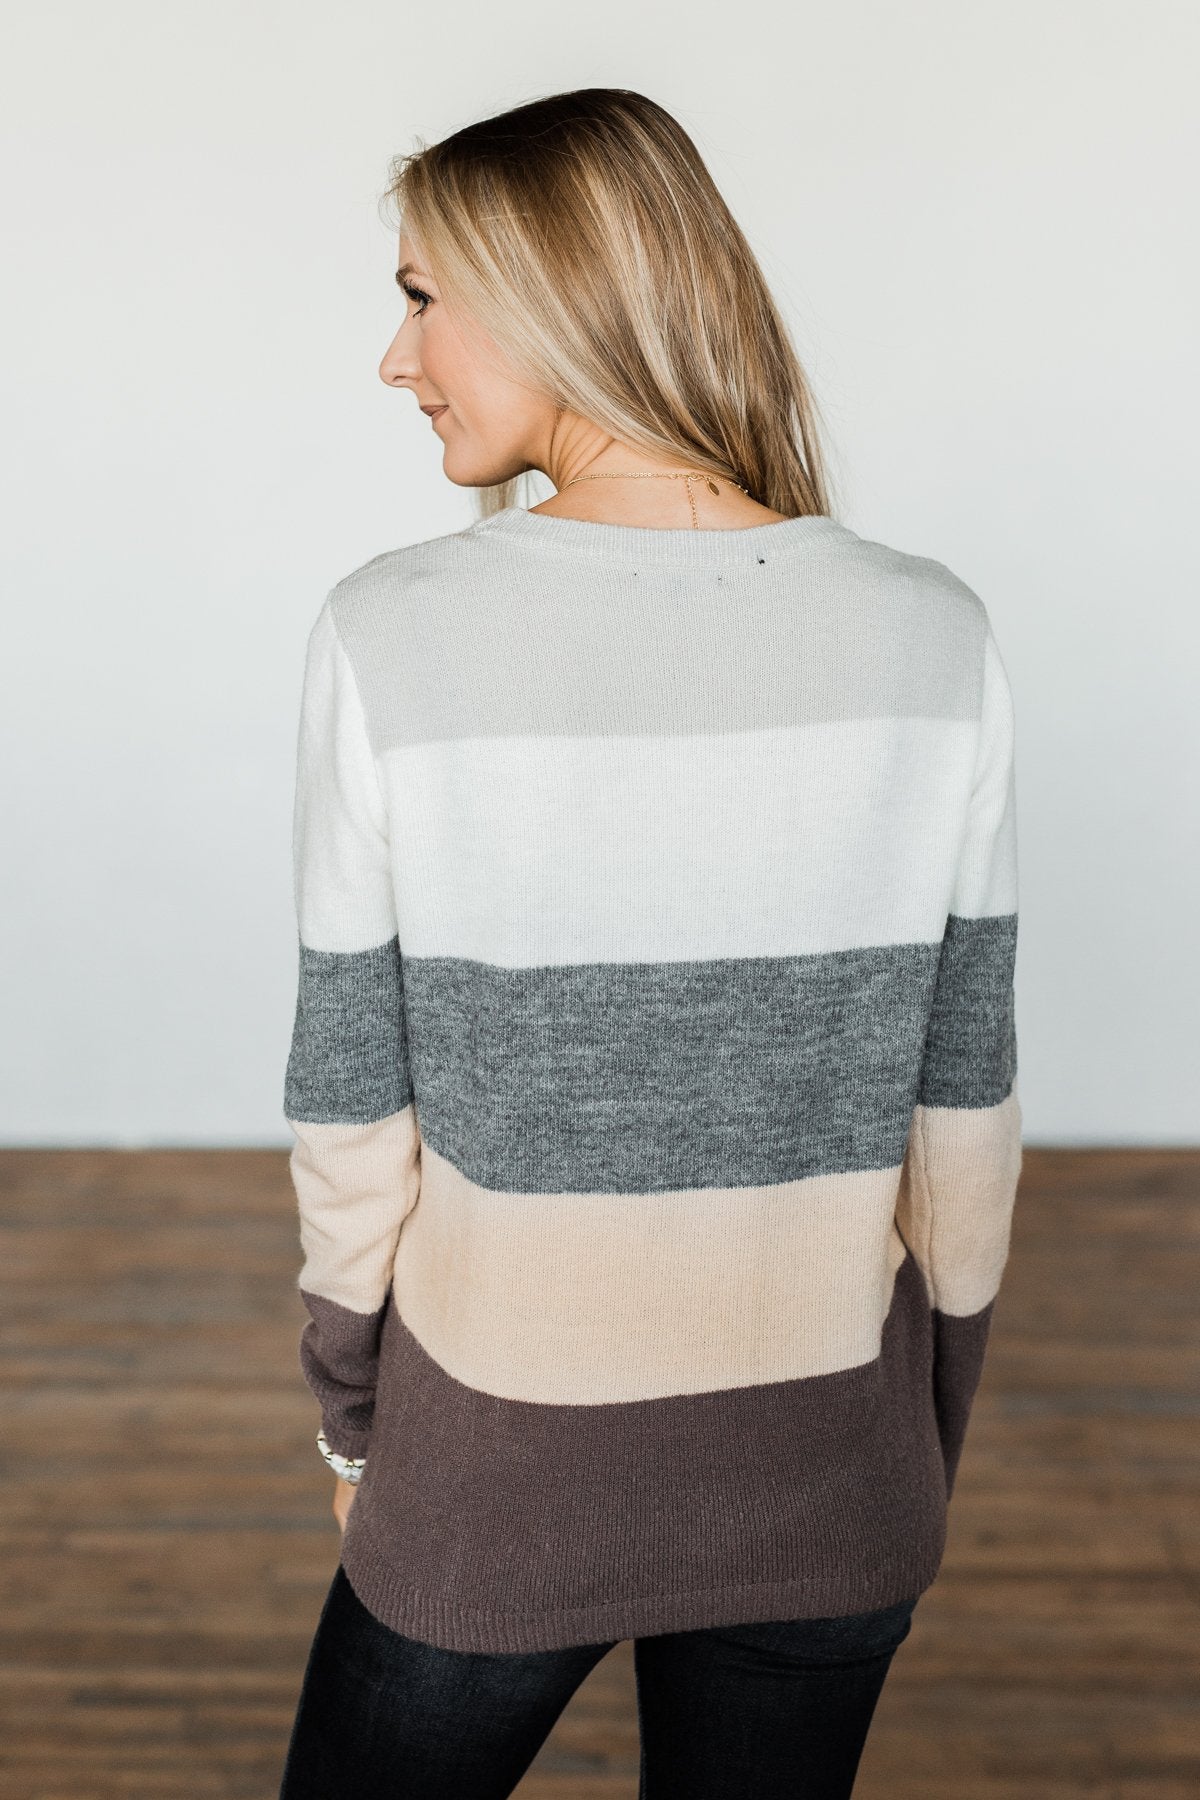 Brings Back Memories Color Block Sweater- Grey, Ivory, Dark Taupe